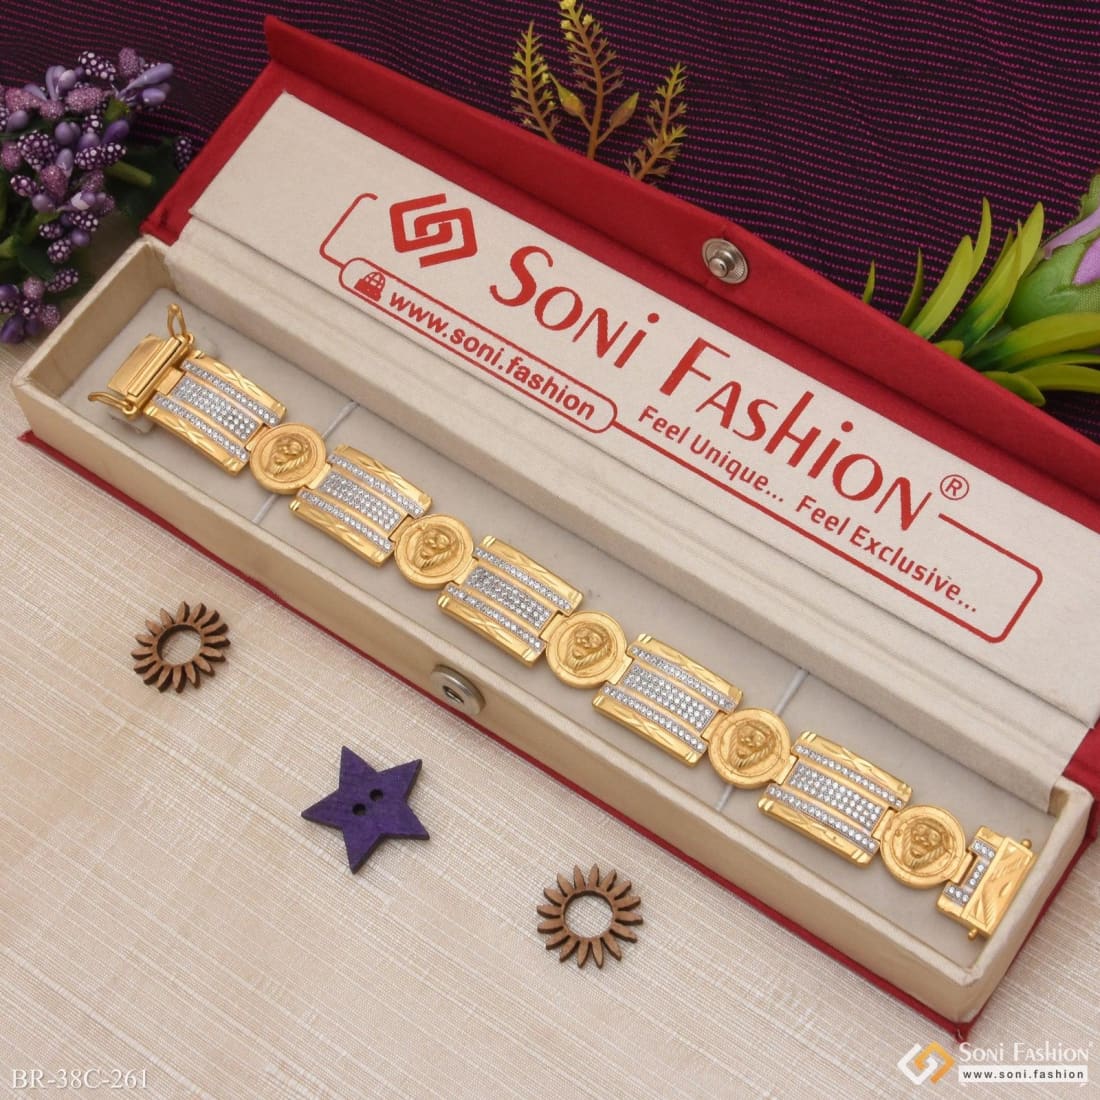 Seamless Welded Bracelets | Permanent Jewellery | Astrid & Miyu